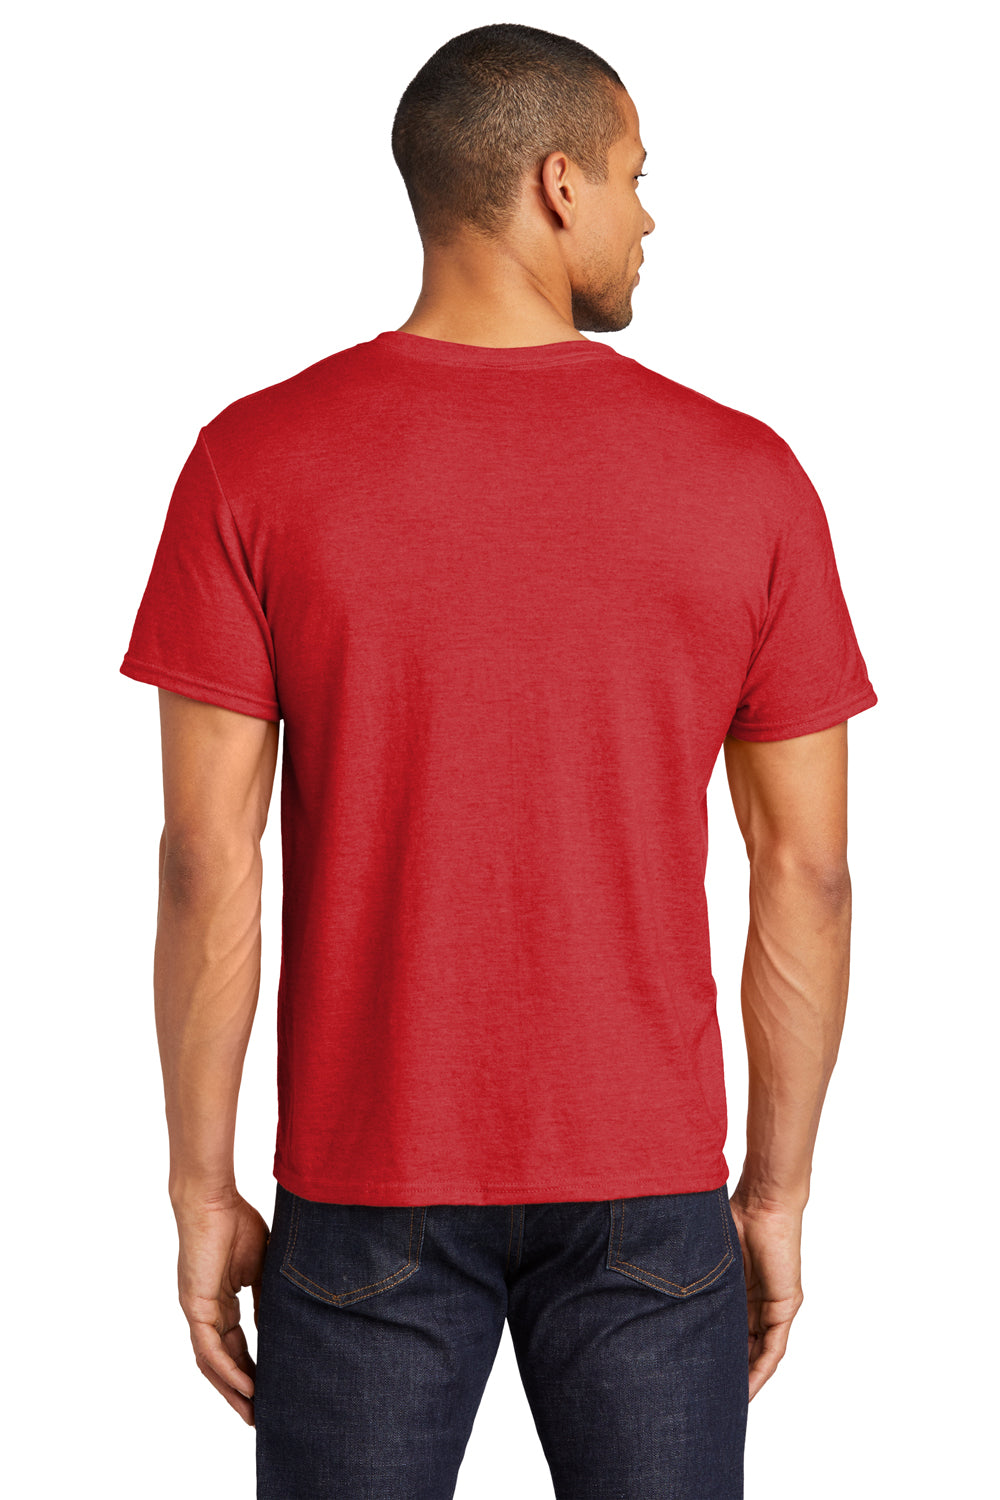 Jerzees 560M Mens Premium Blend Ring Spun Short Sleeve Crewneck T-Shirt True Red Back